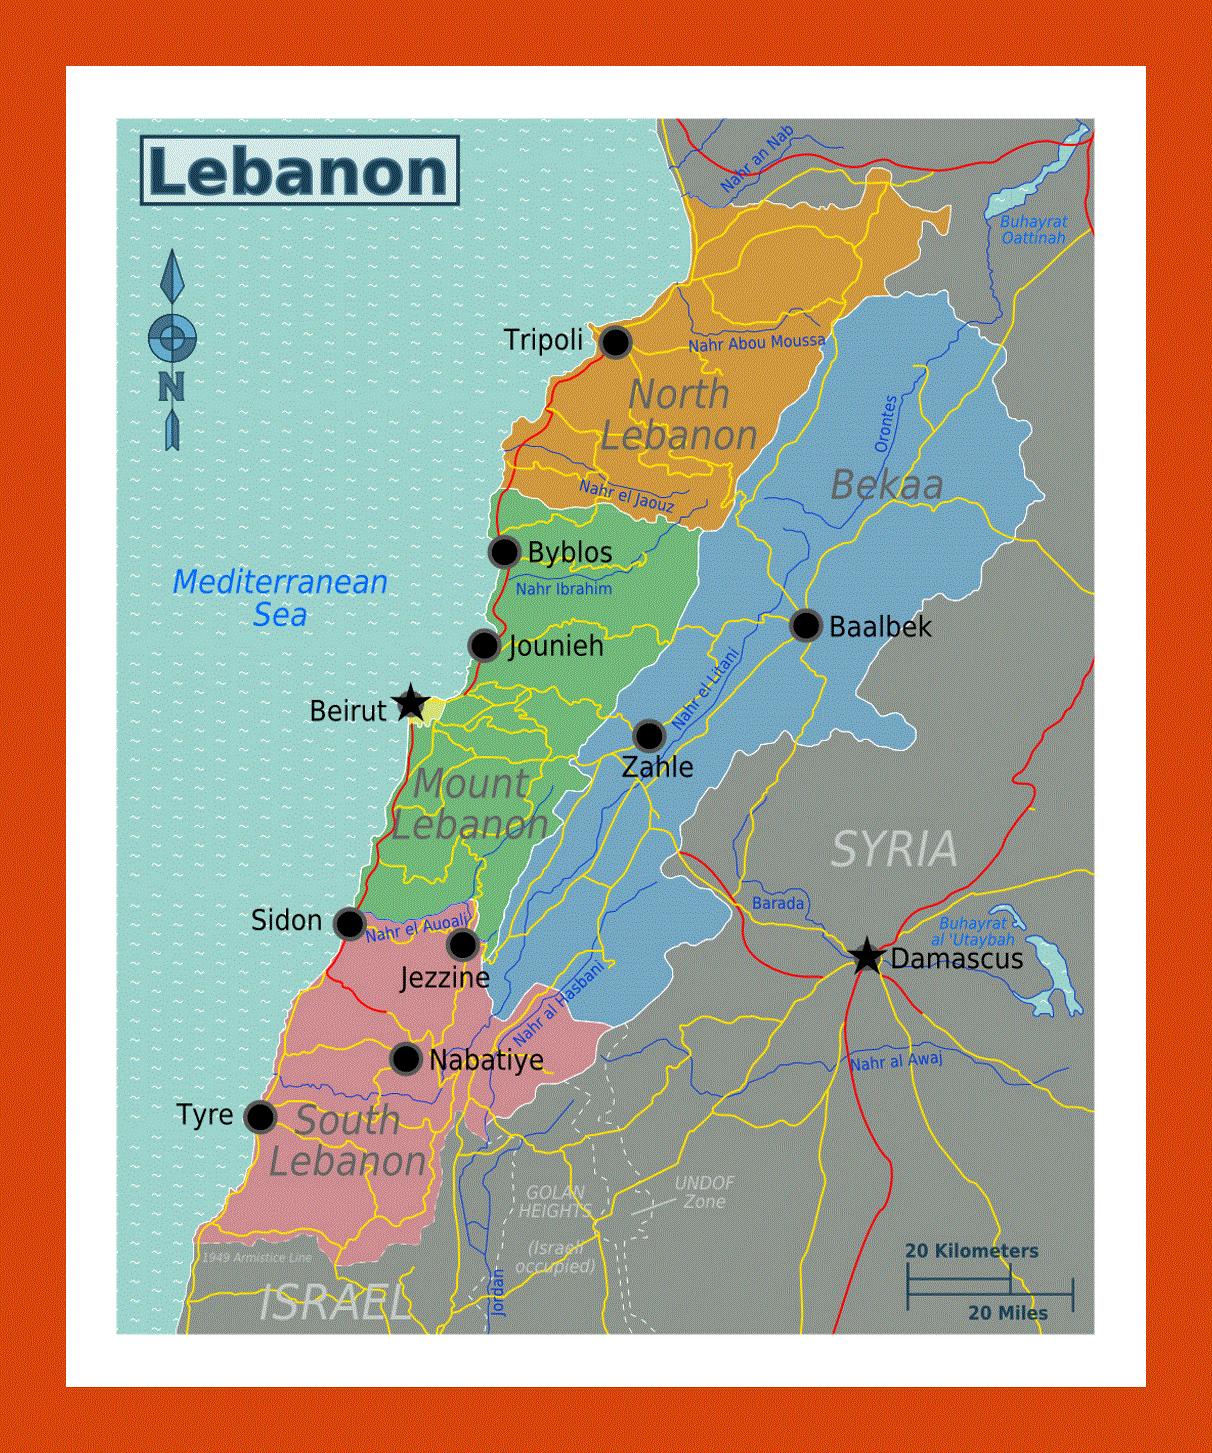 Regions map of Lebanon